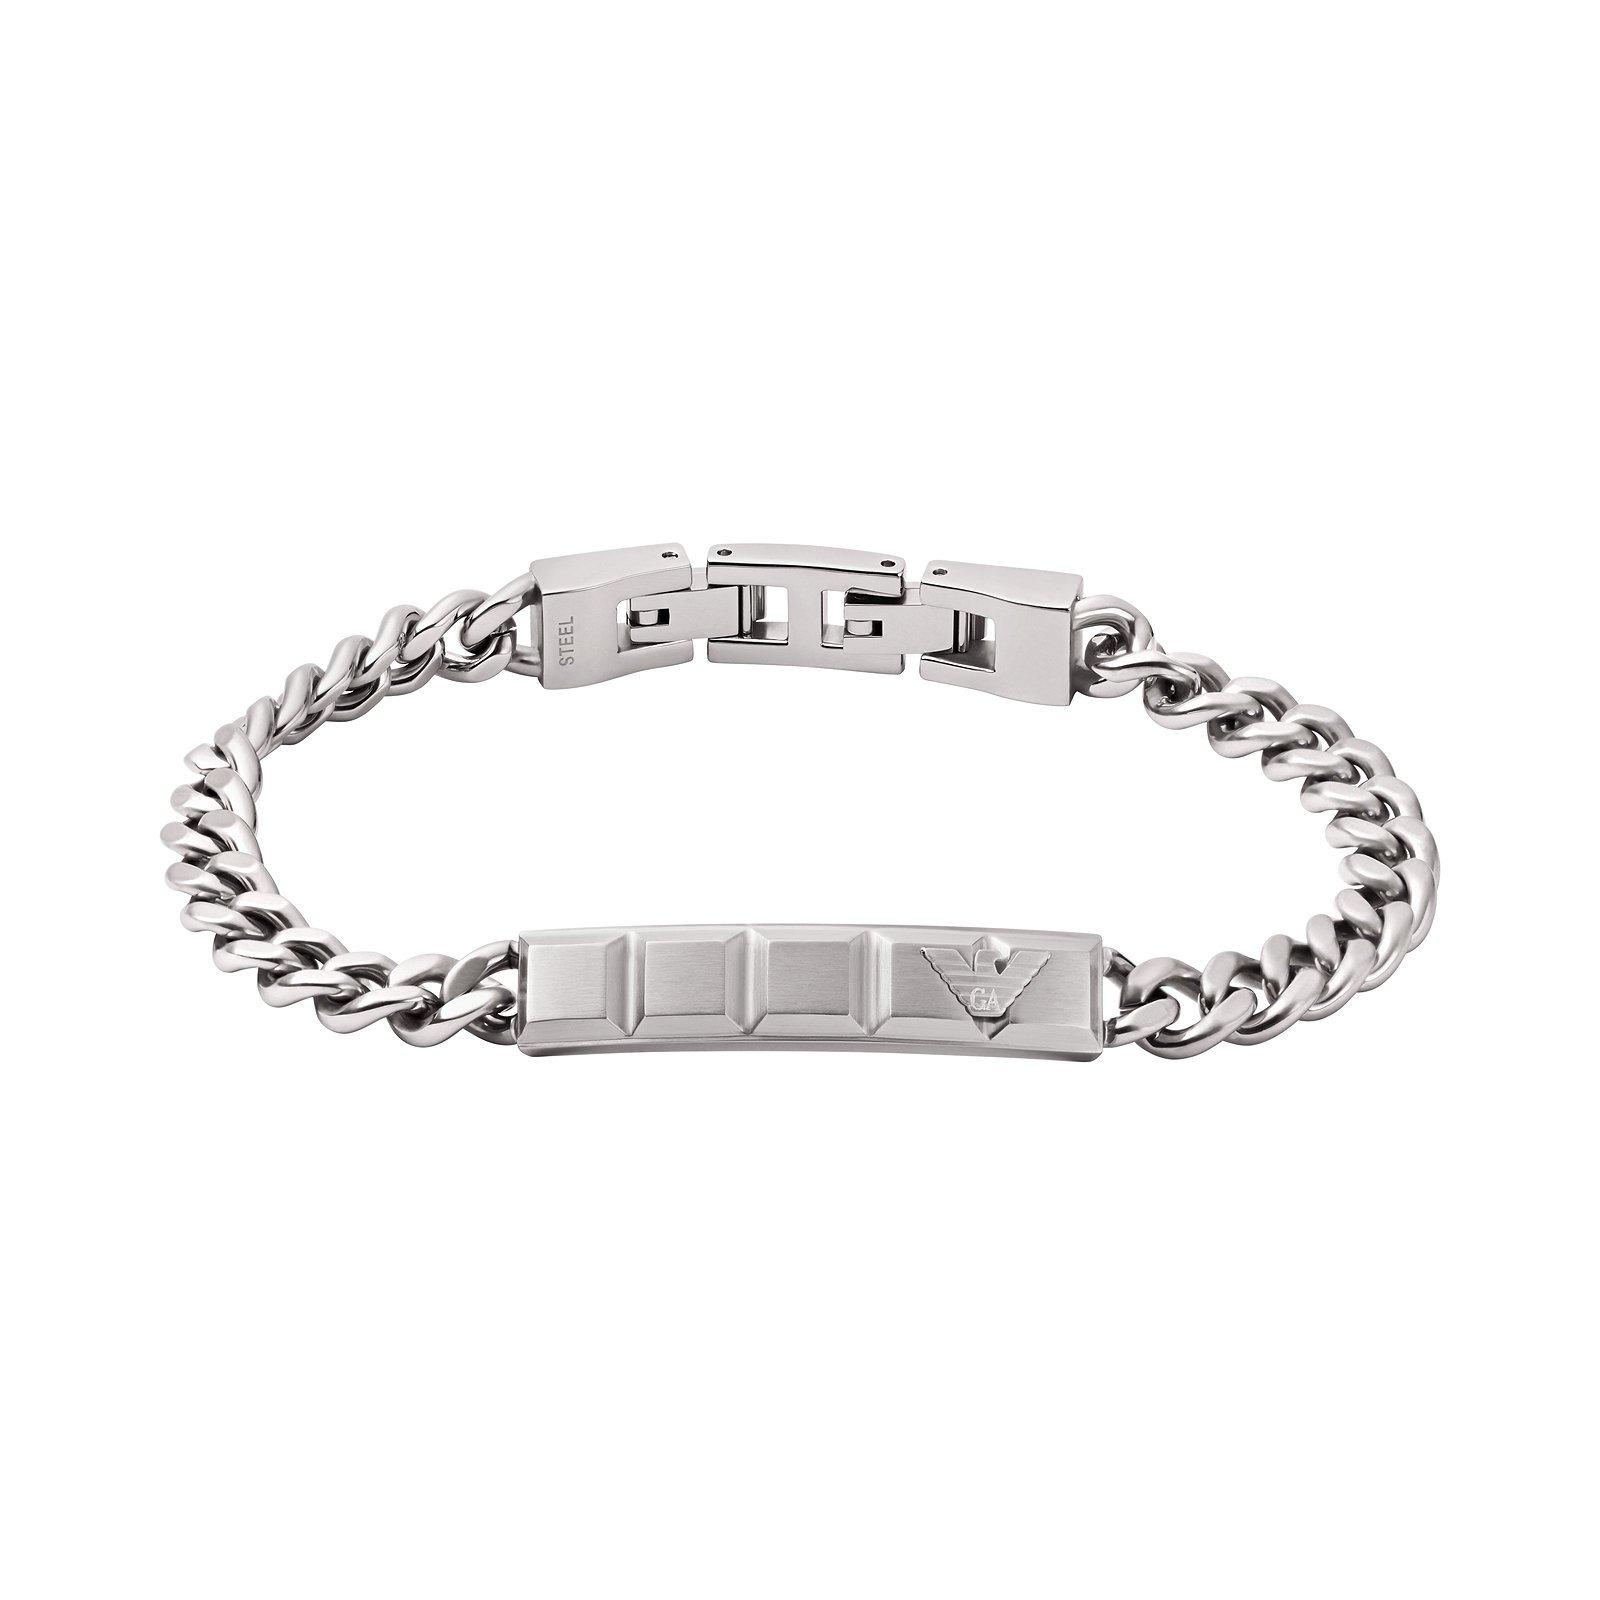 Emporio Armani Chain Men’s Bracelet | 0132099 | Beaverbrooks the Jewellers